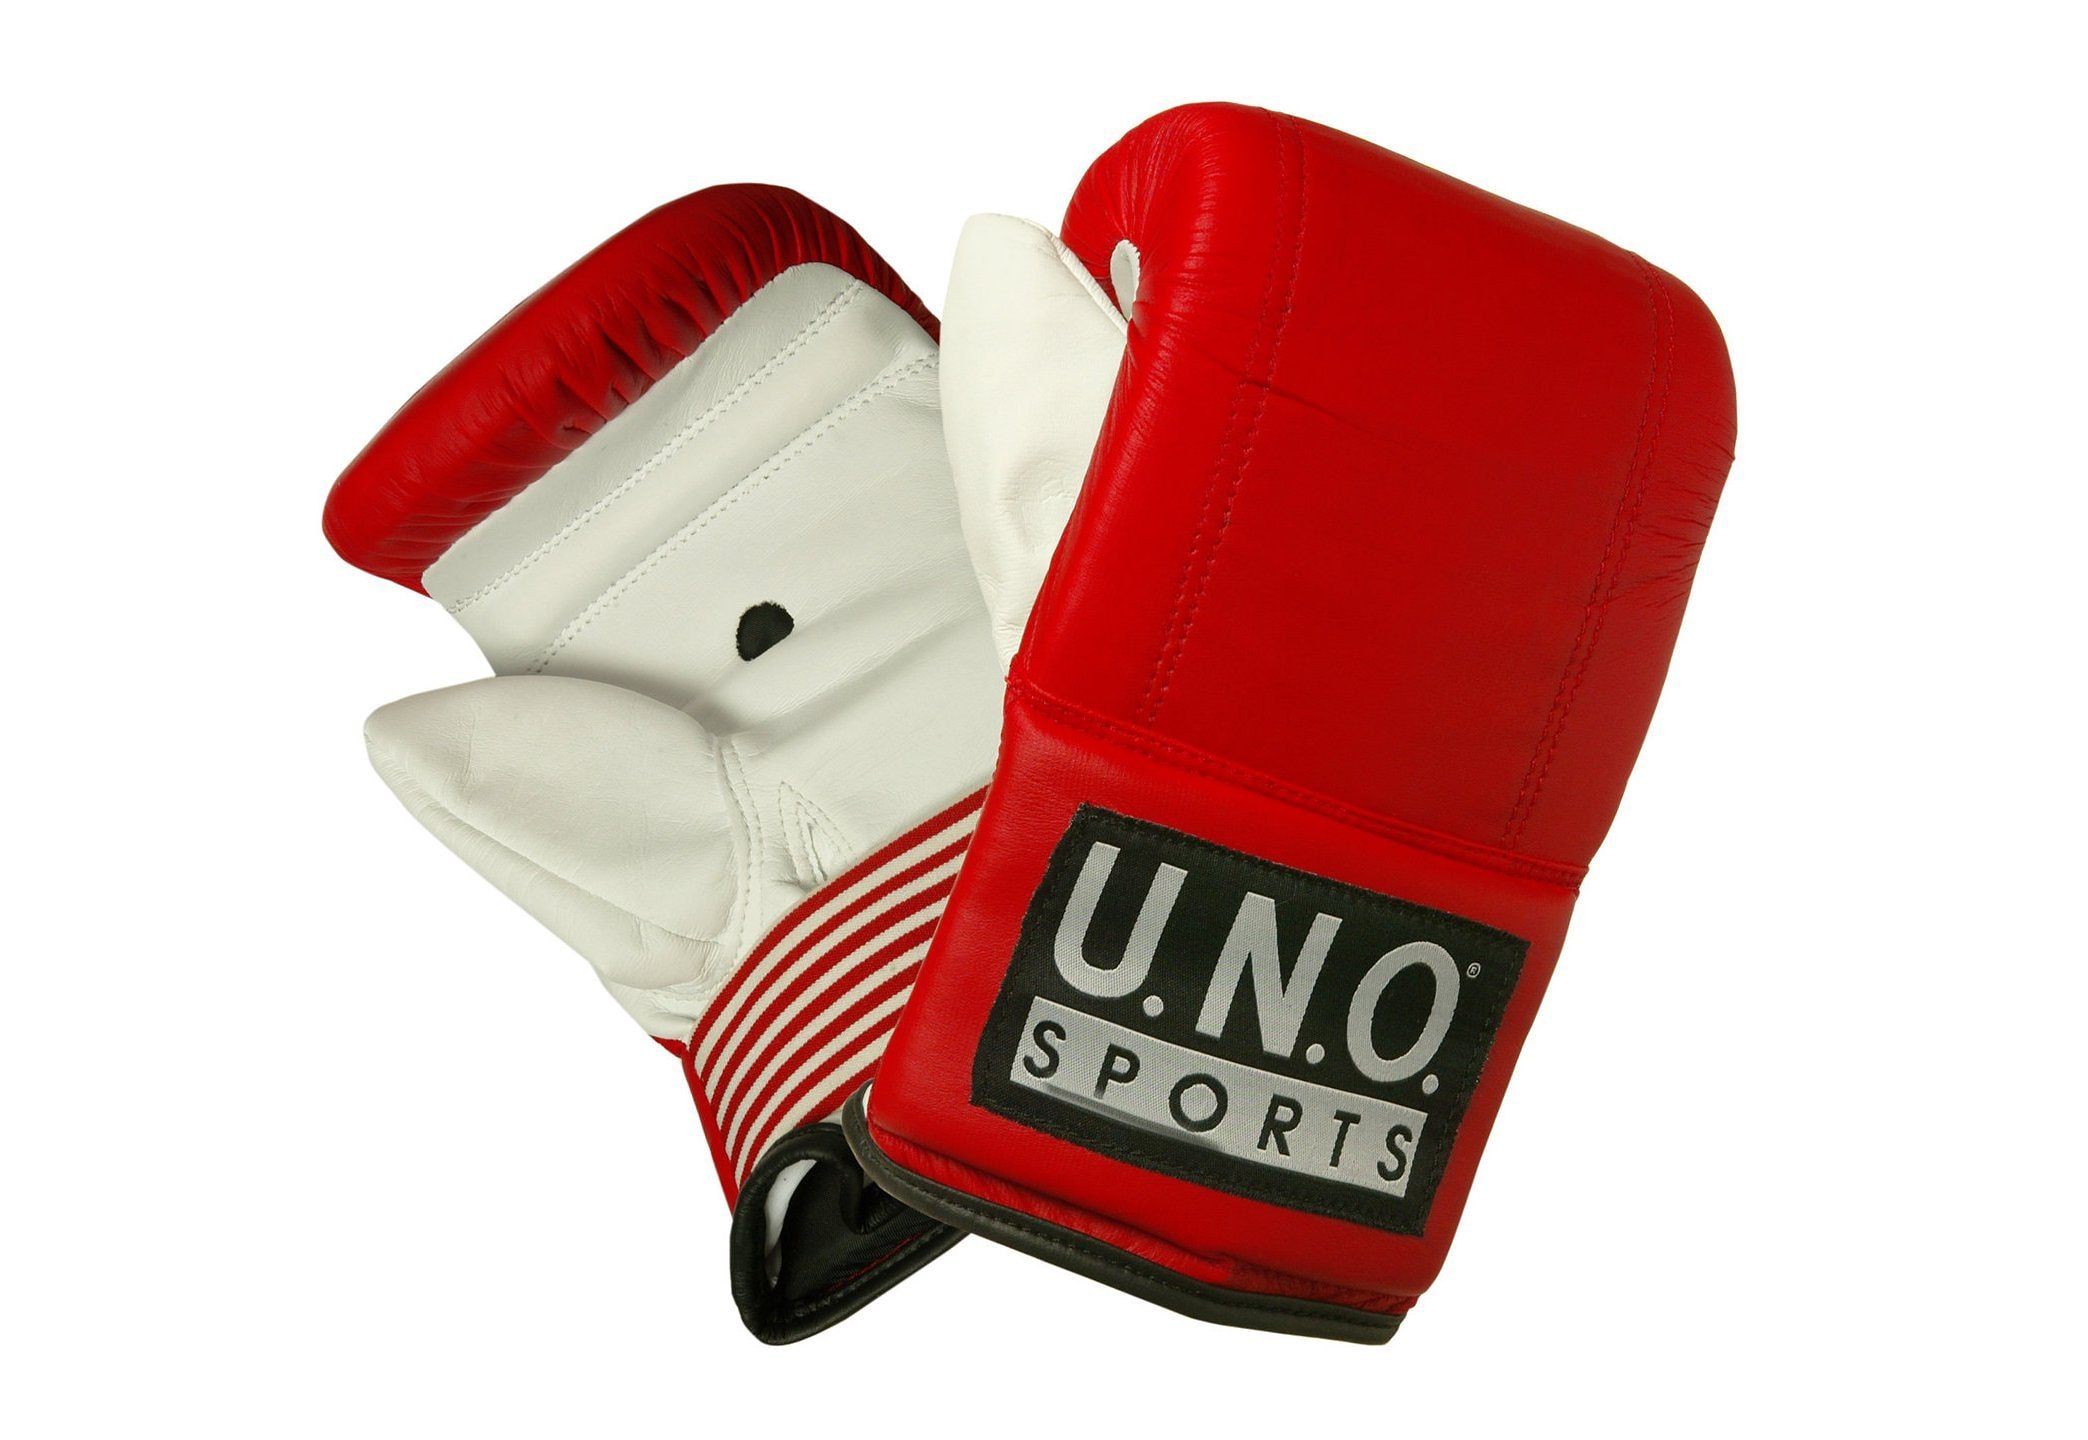 U.N.O. SPORTS Boxhandschuhe günstig kaufen »Light«